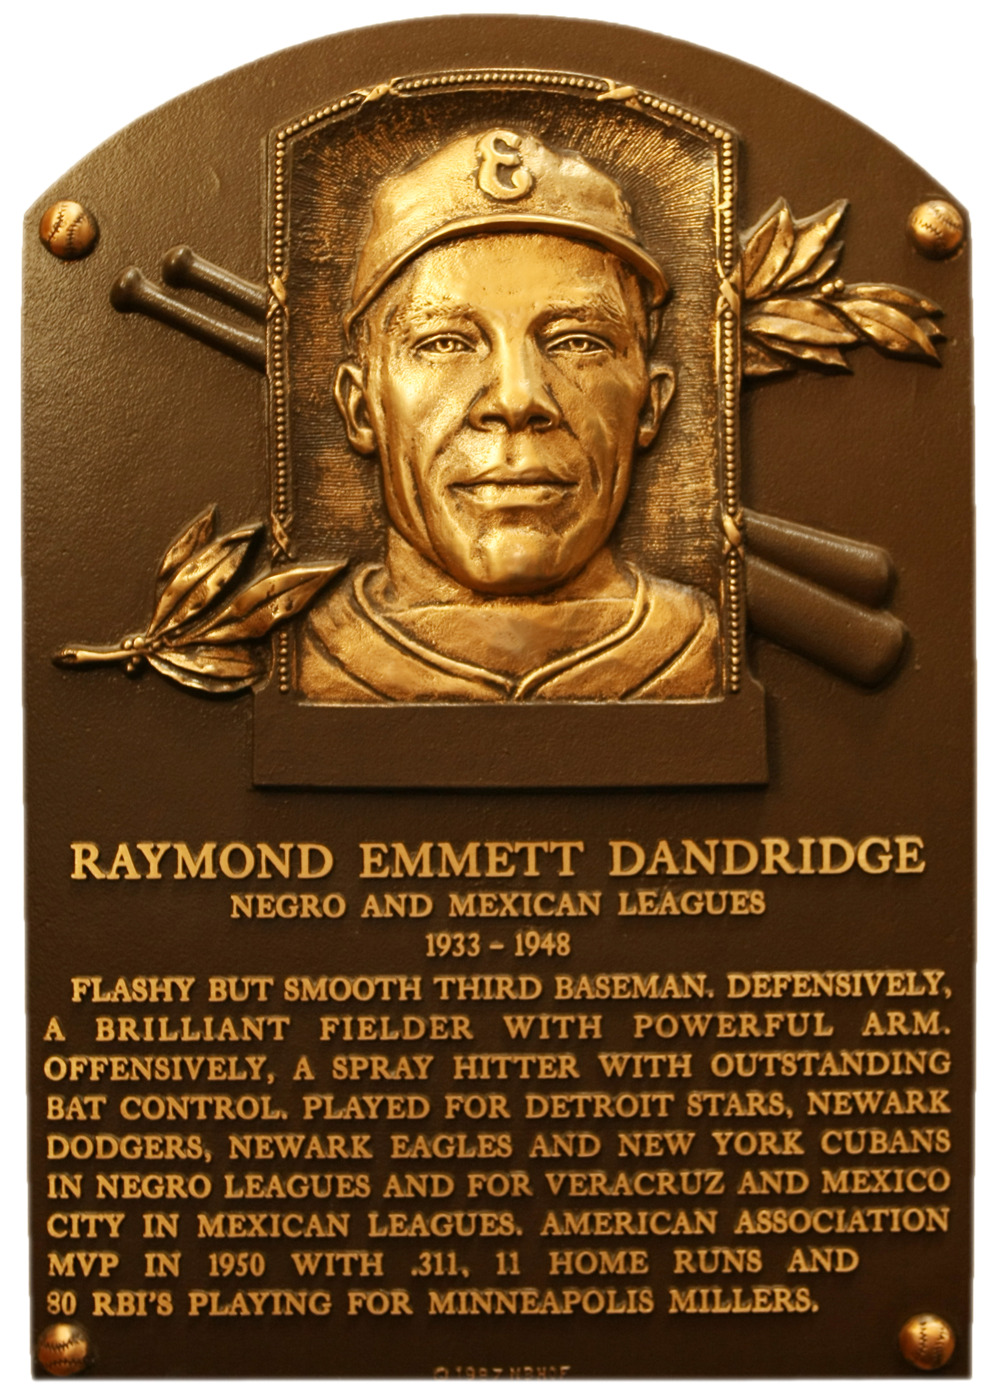 Ray Dandridge Hall of Fame plaque